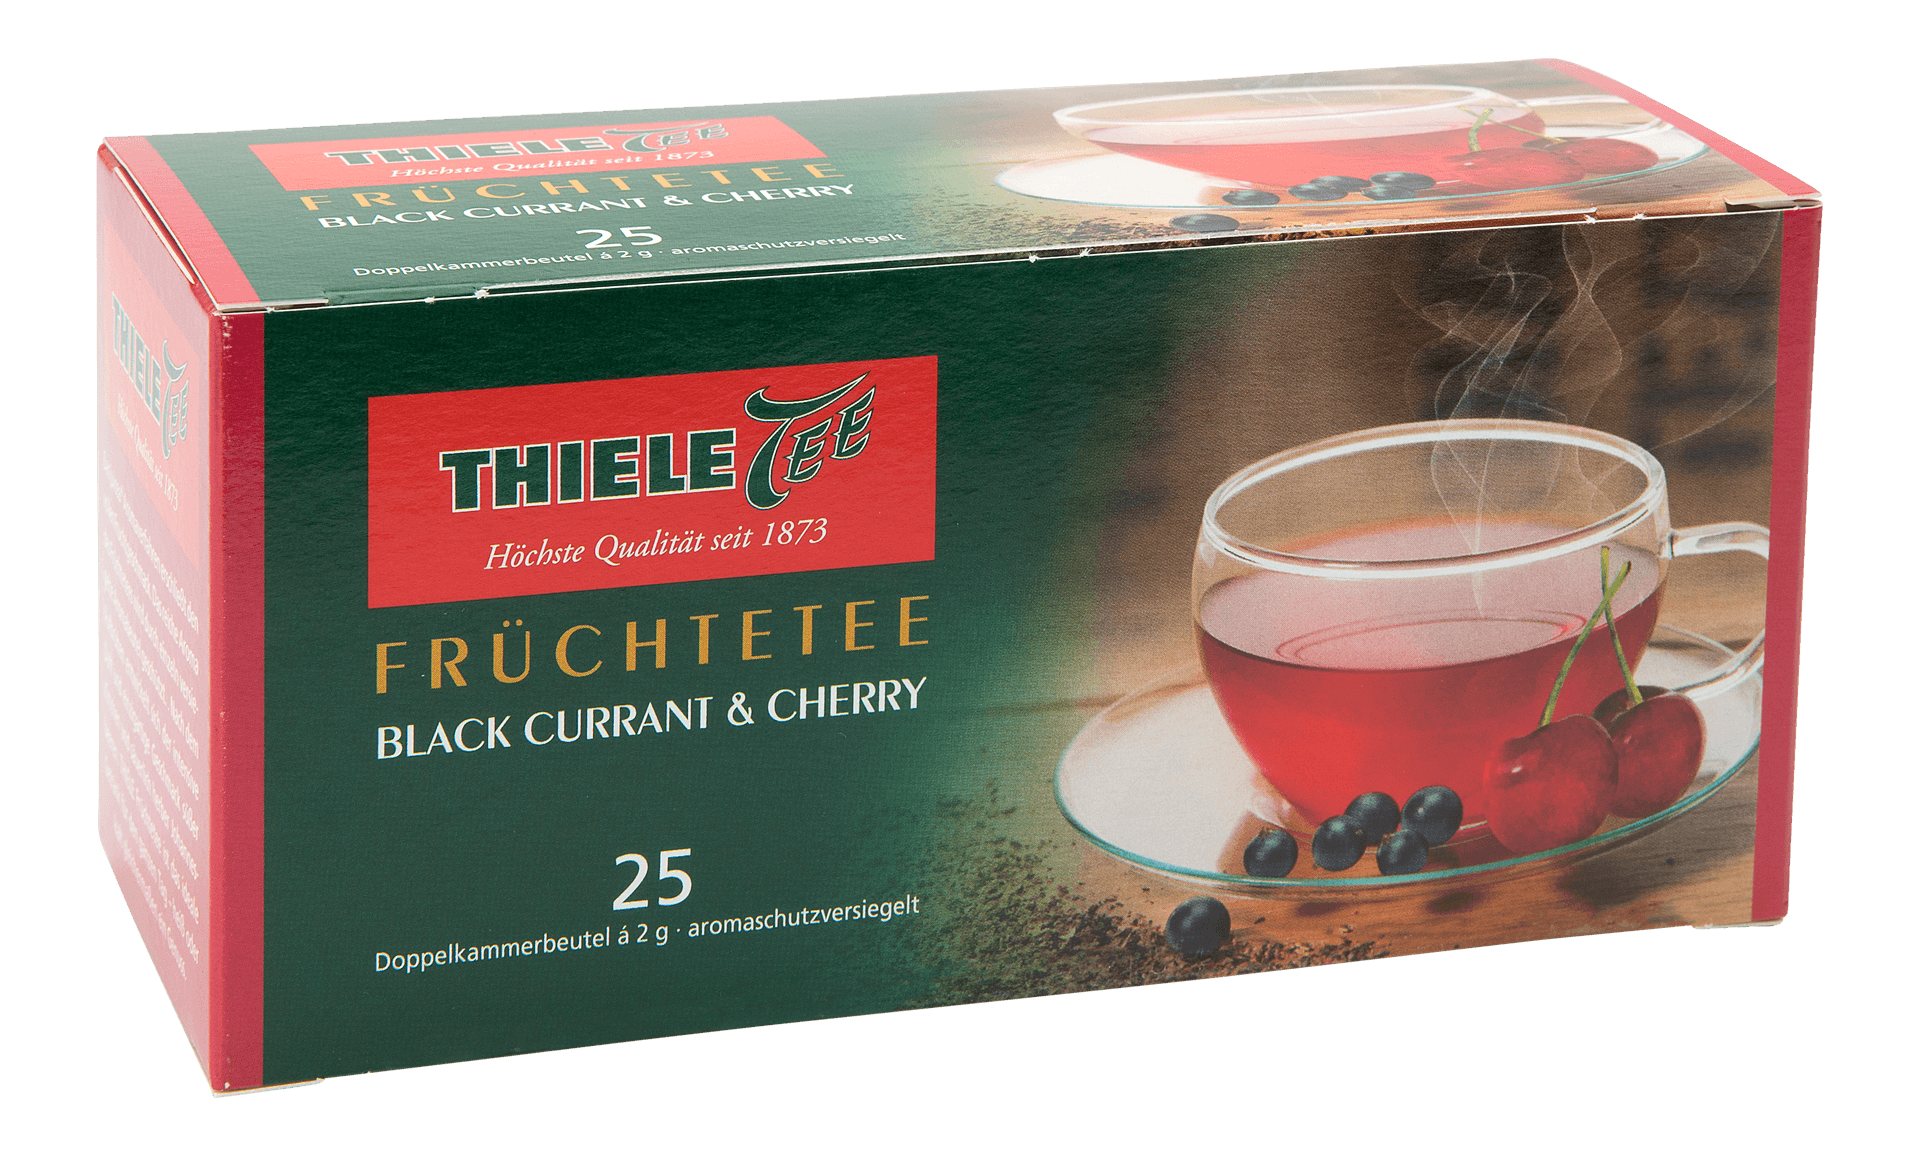 Juicea Blackcurrant & Cherry 25 x 2g